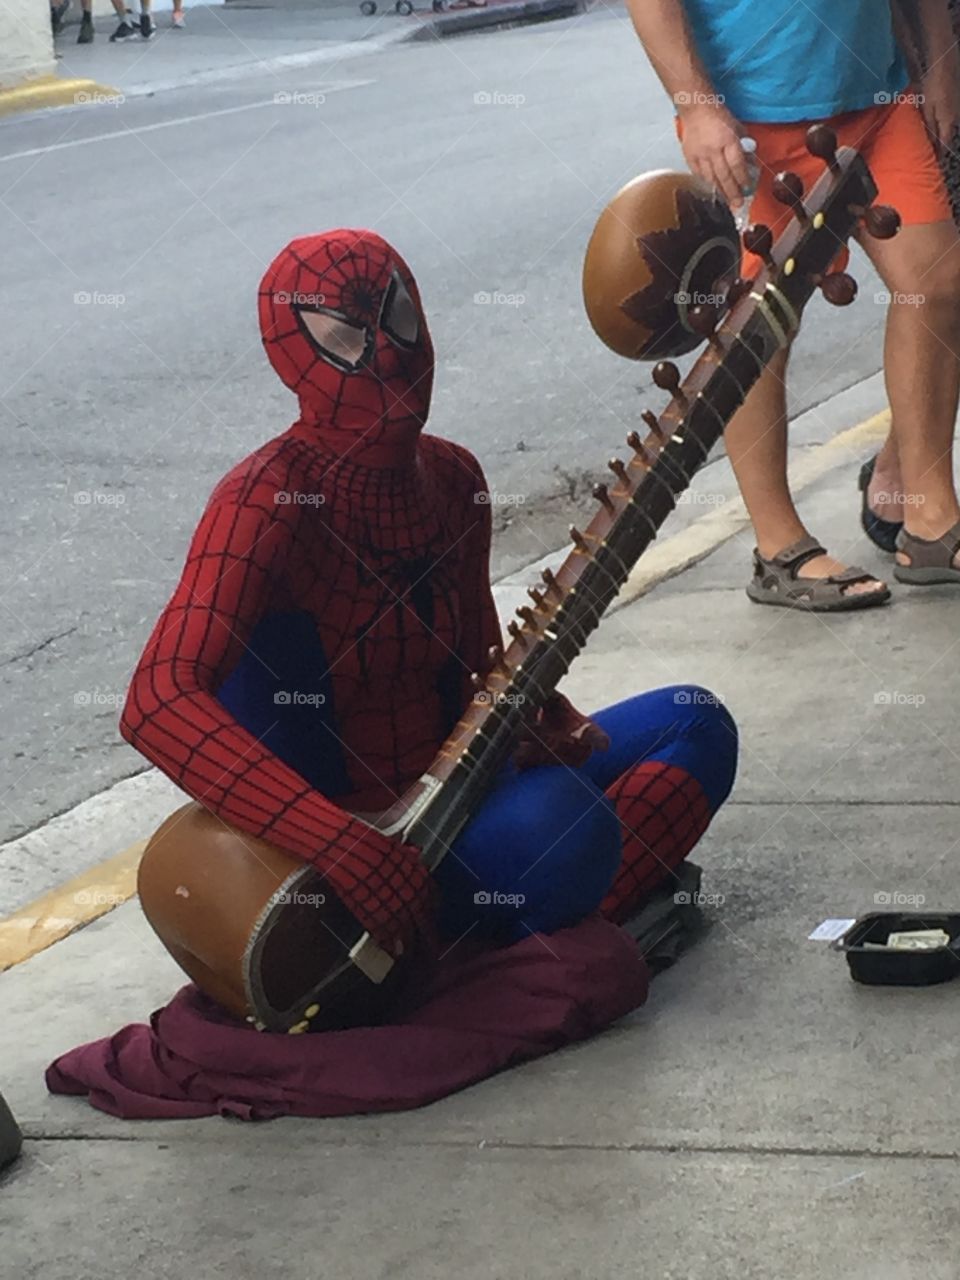 Spider man playing a lite, Key West, FL, USA